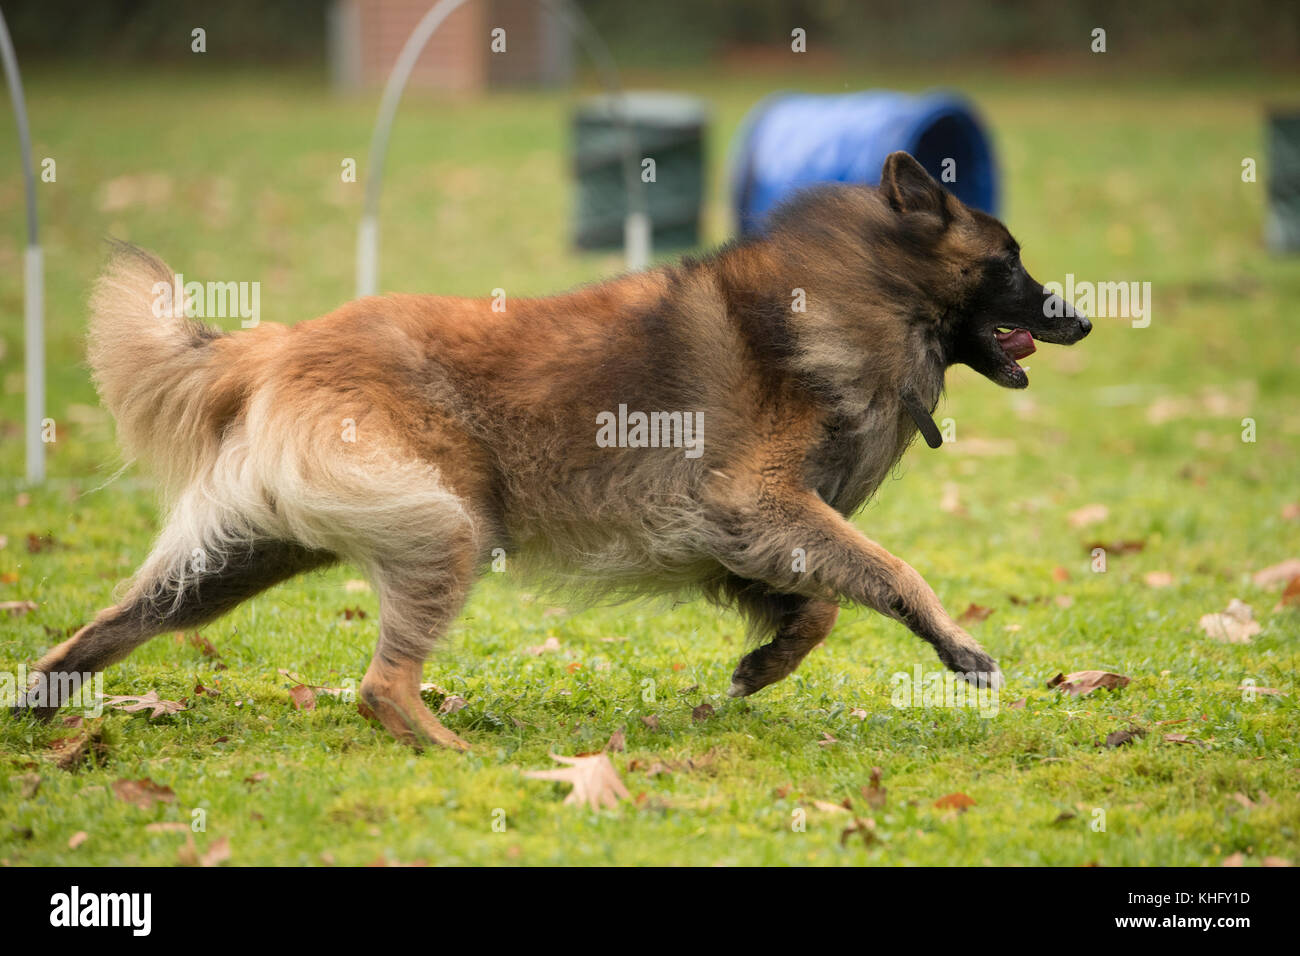 Dog, Belgian Shepherd Tervuren, running in agility competition Stock Photo